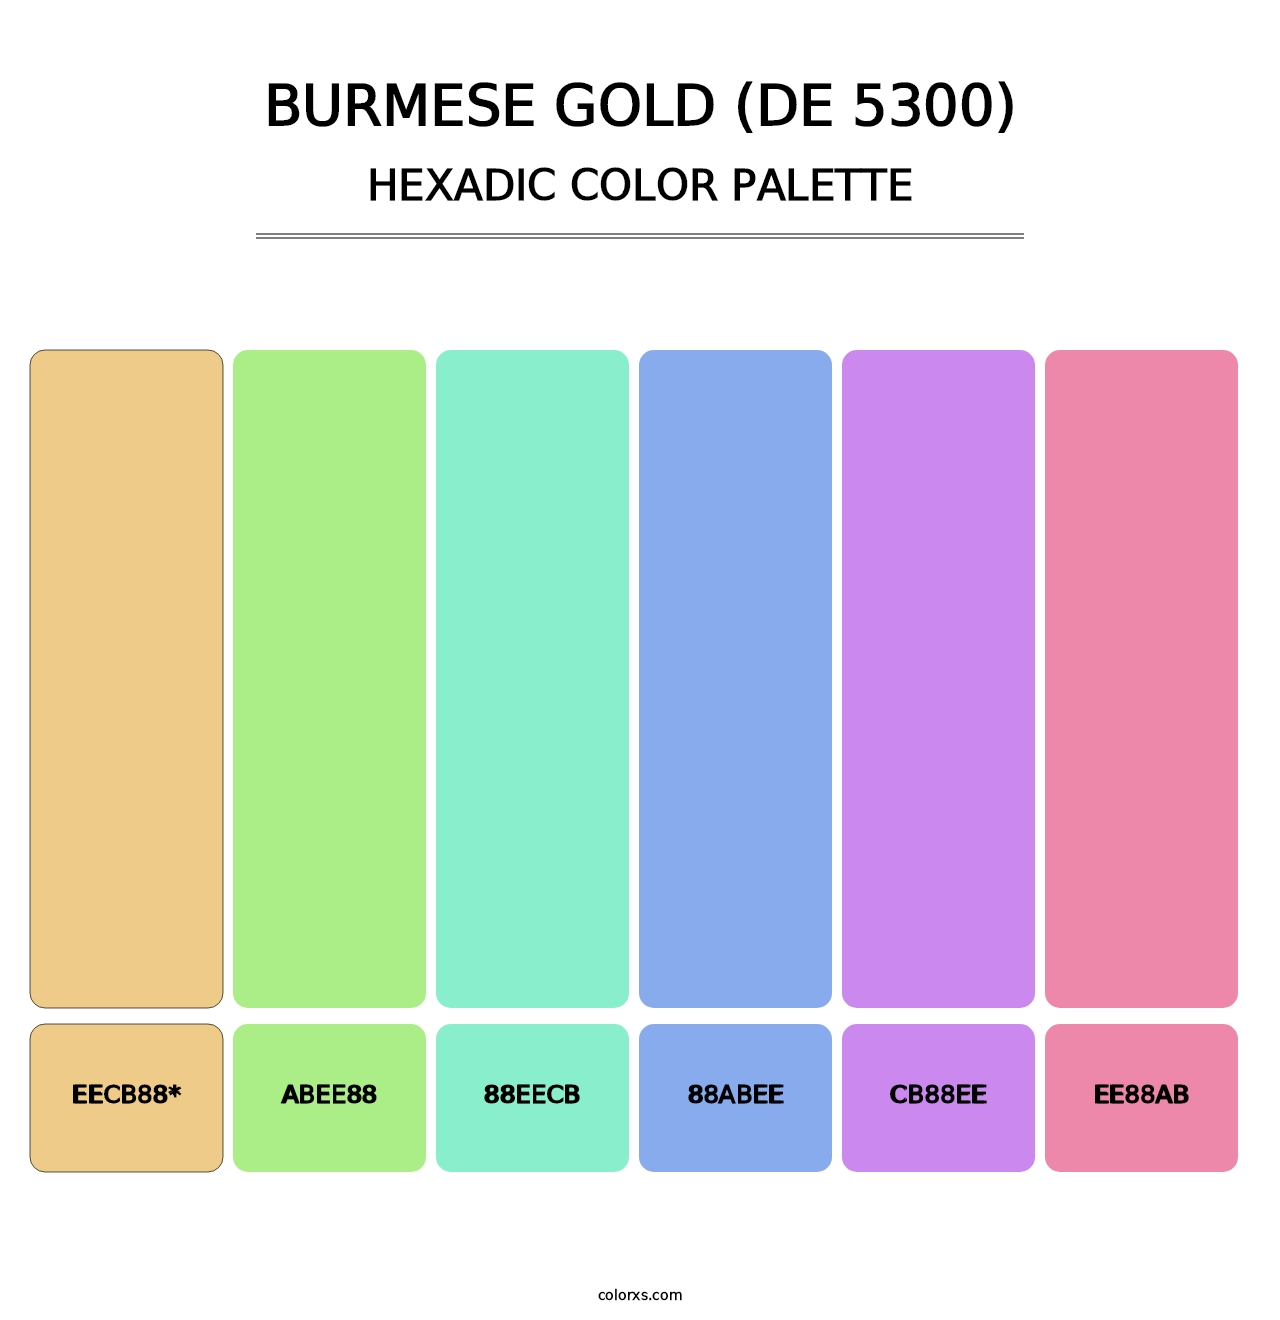 Burmese Gold (DE 5300) - Hexadic Color Palette